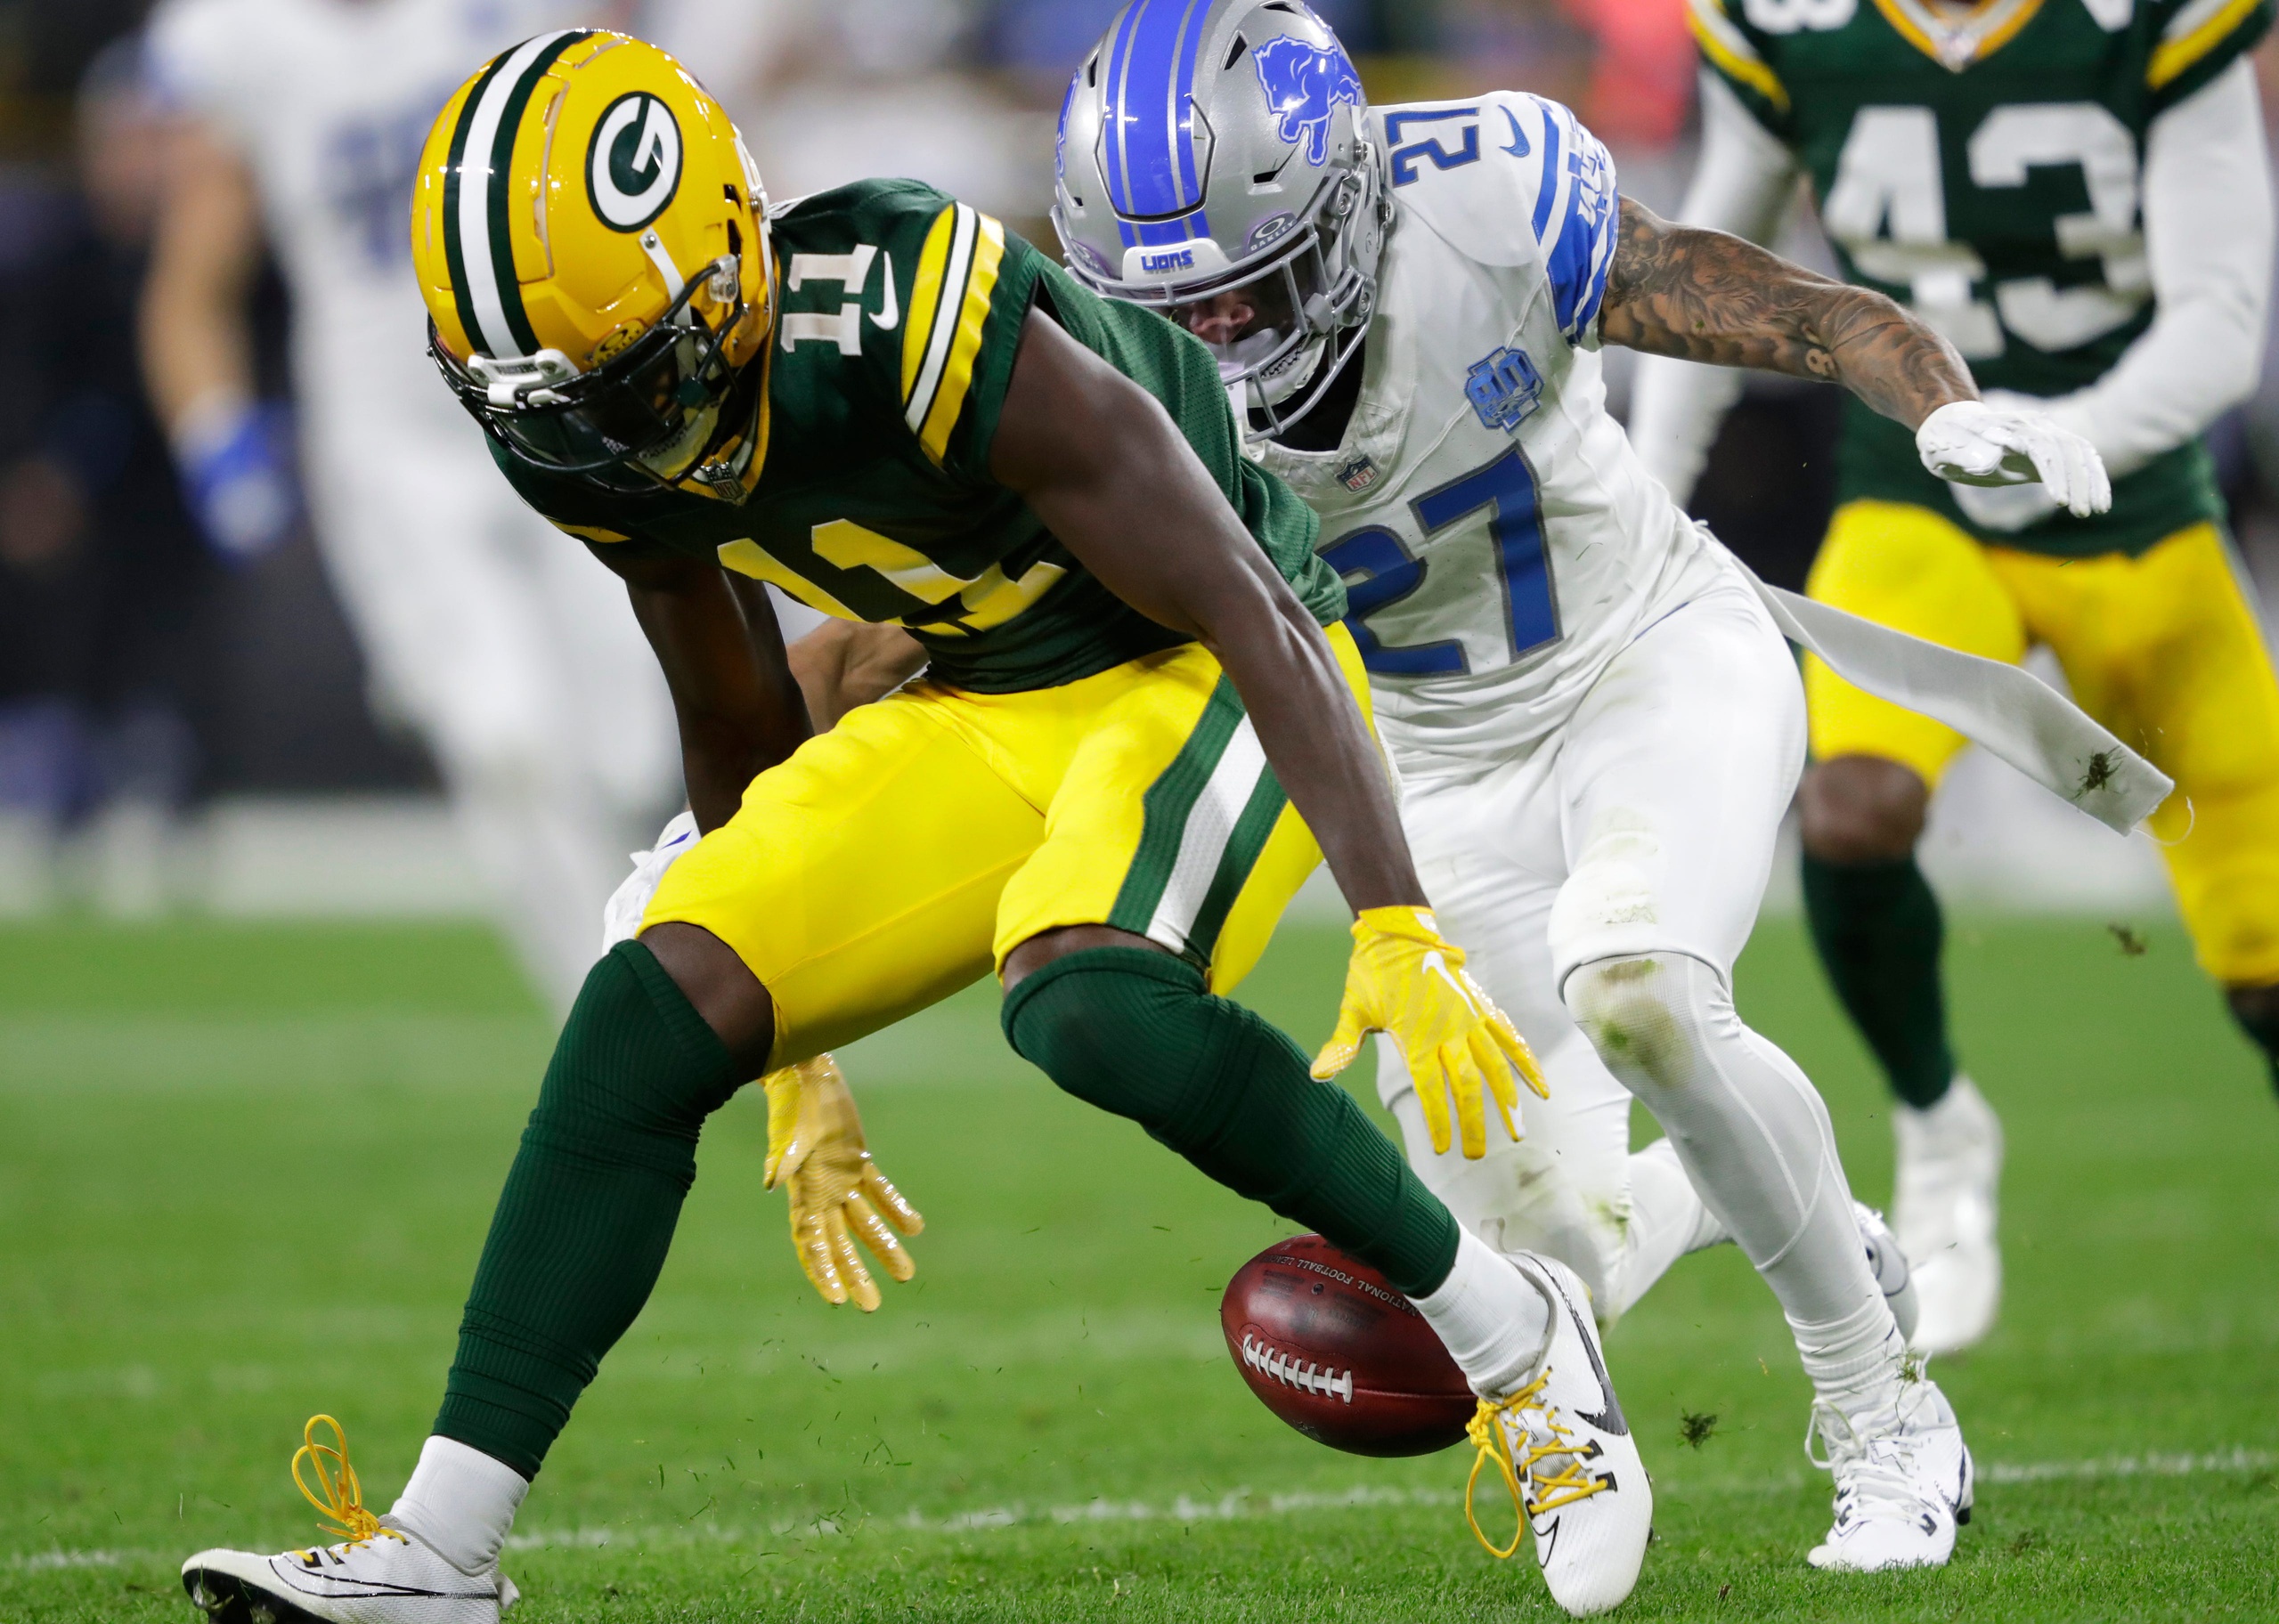 NFL Week 5 ATS picks: Packers prevail with Aaron Jones over Lions